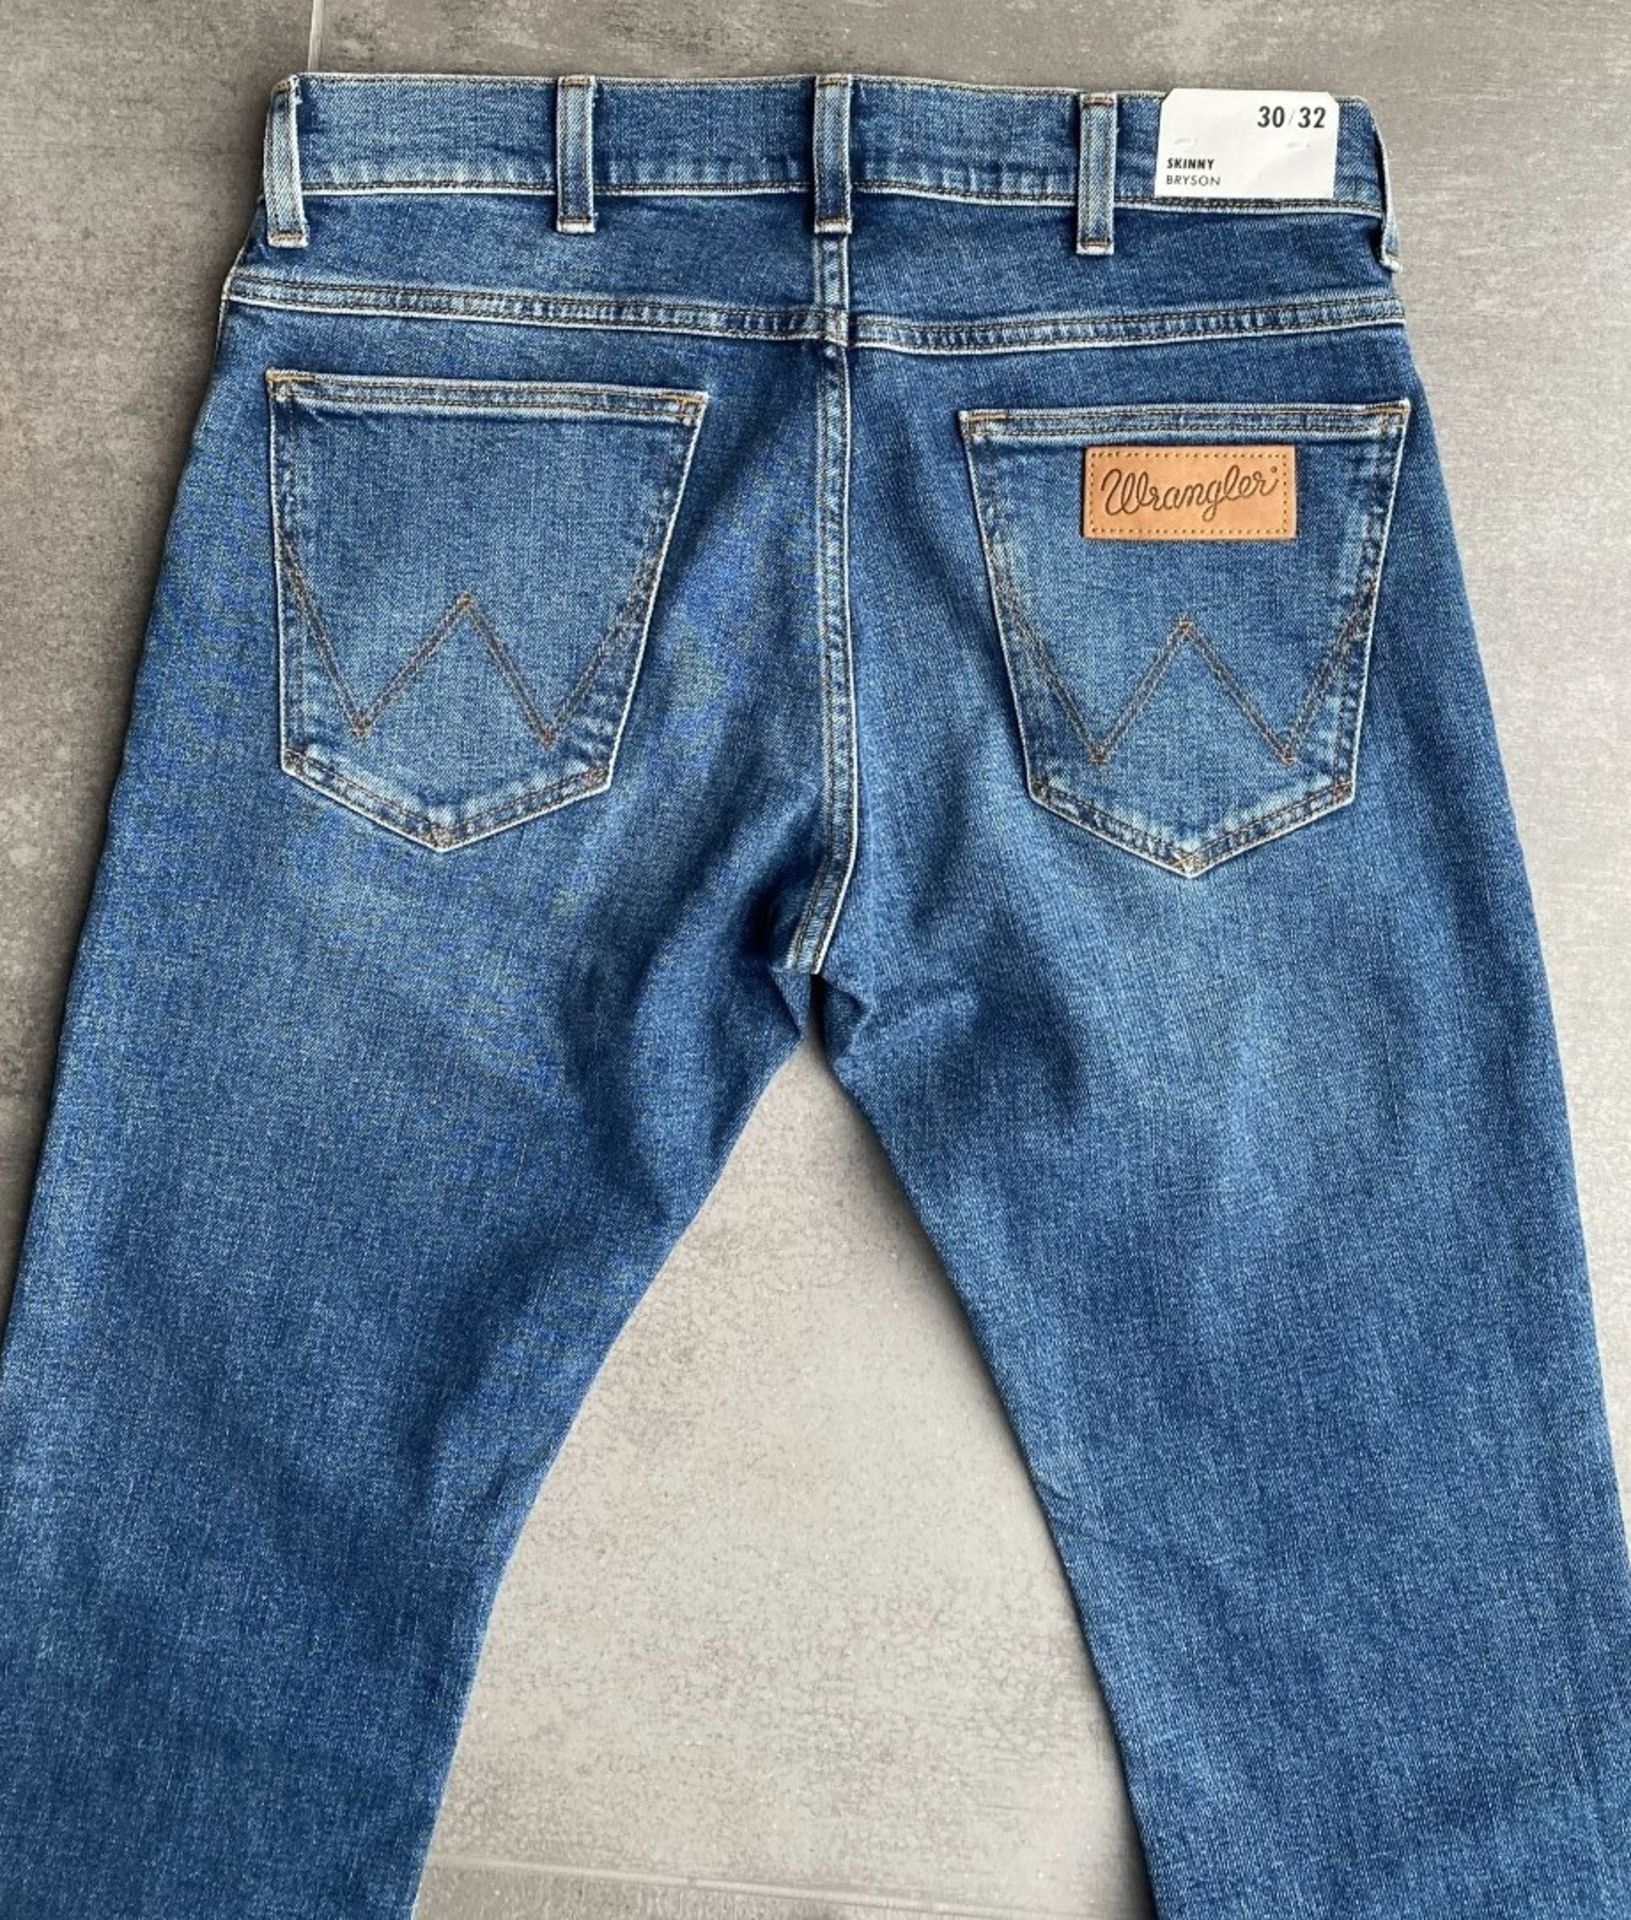 1 x Pair Of Men's Genuine Wrangler BRYSON Skinny Jeans In Blue - Size: UK 30/32 - Preowned, Like - Image 10 of 10